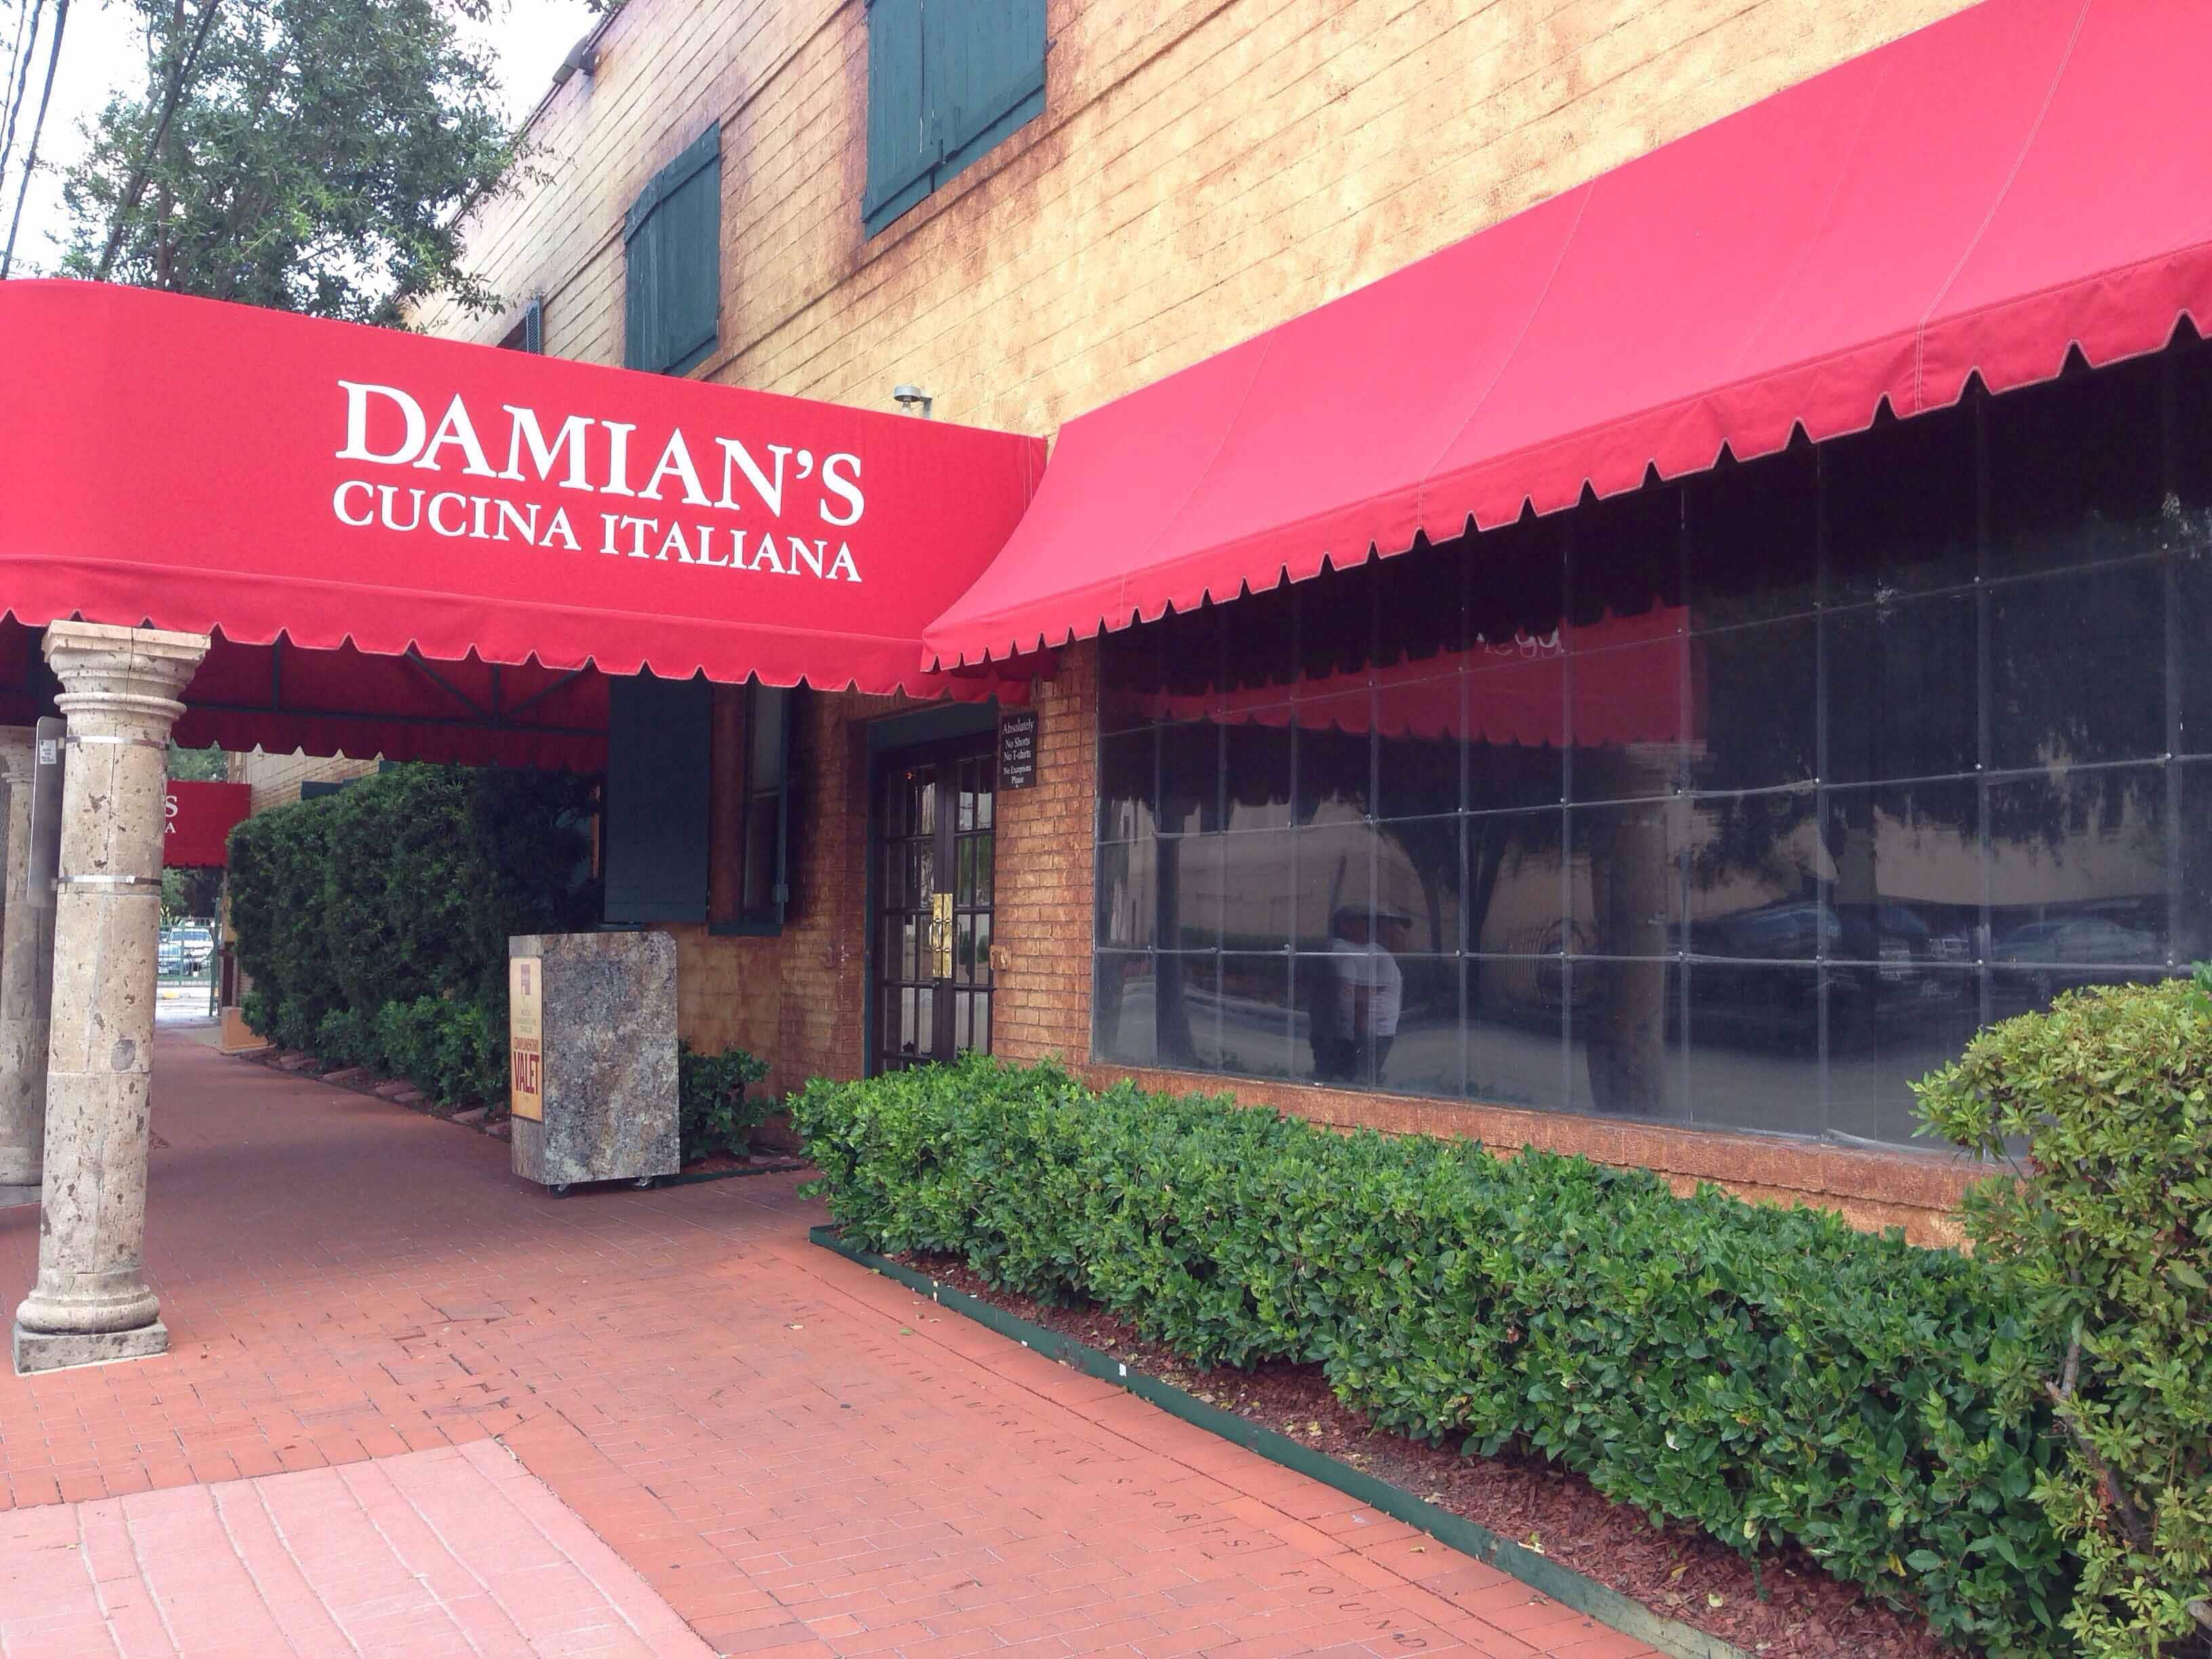 Damian's Cucina Italiana Photos, Pictures of Damian's Cucina Italiana, Houston | Zomato